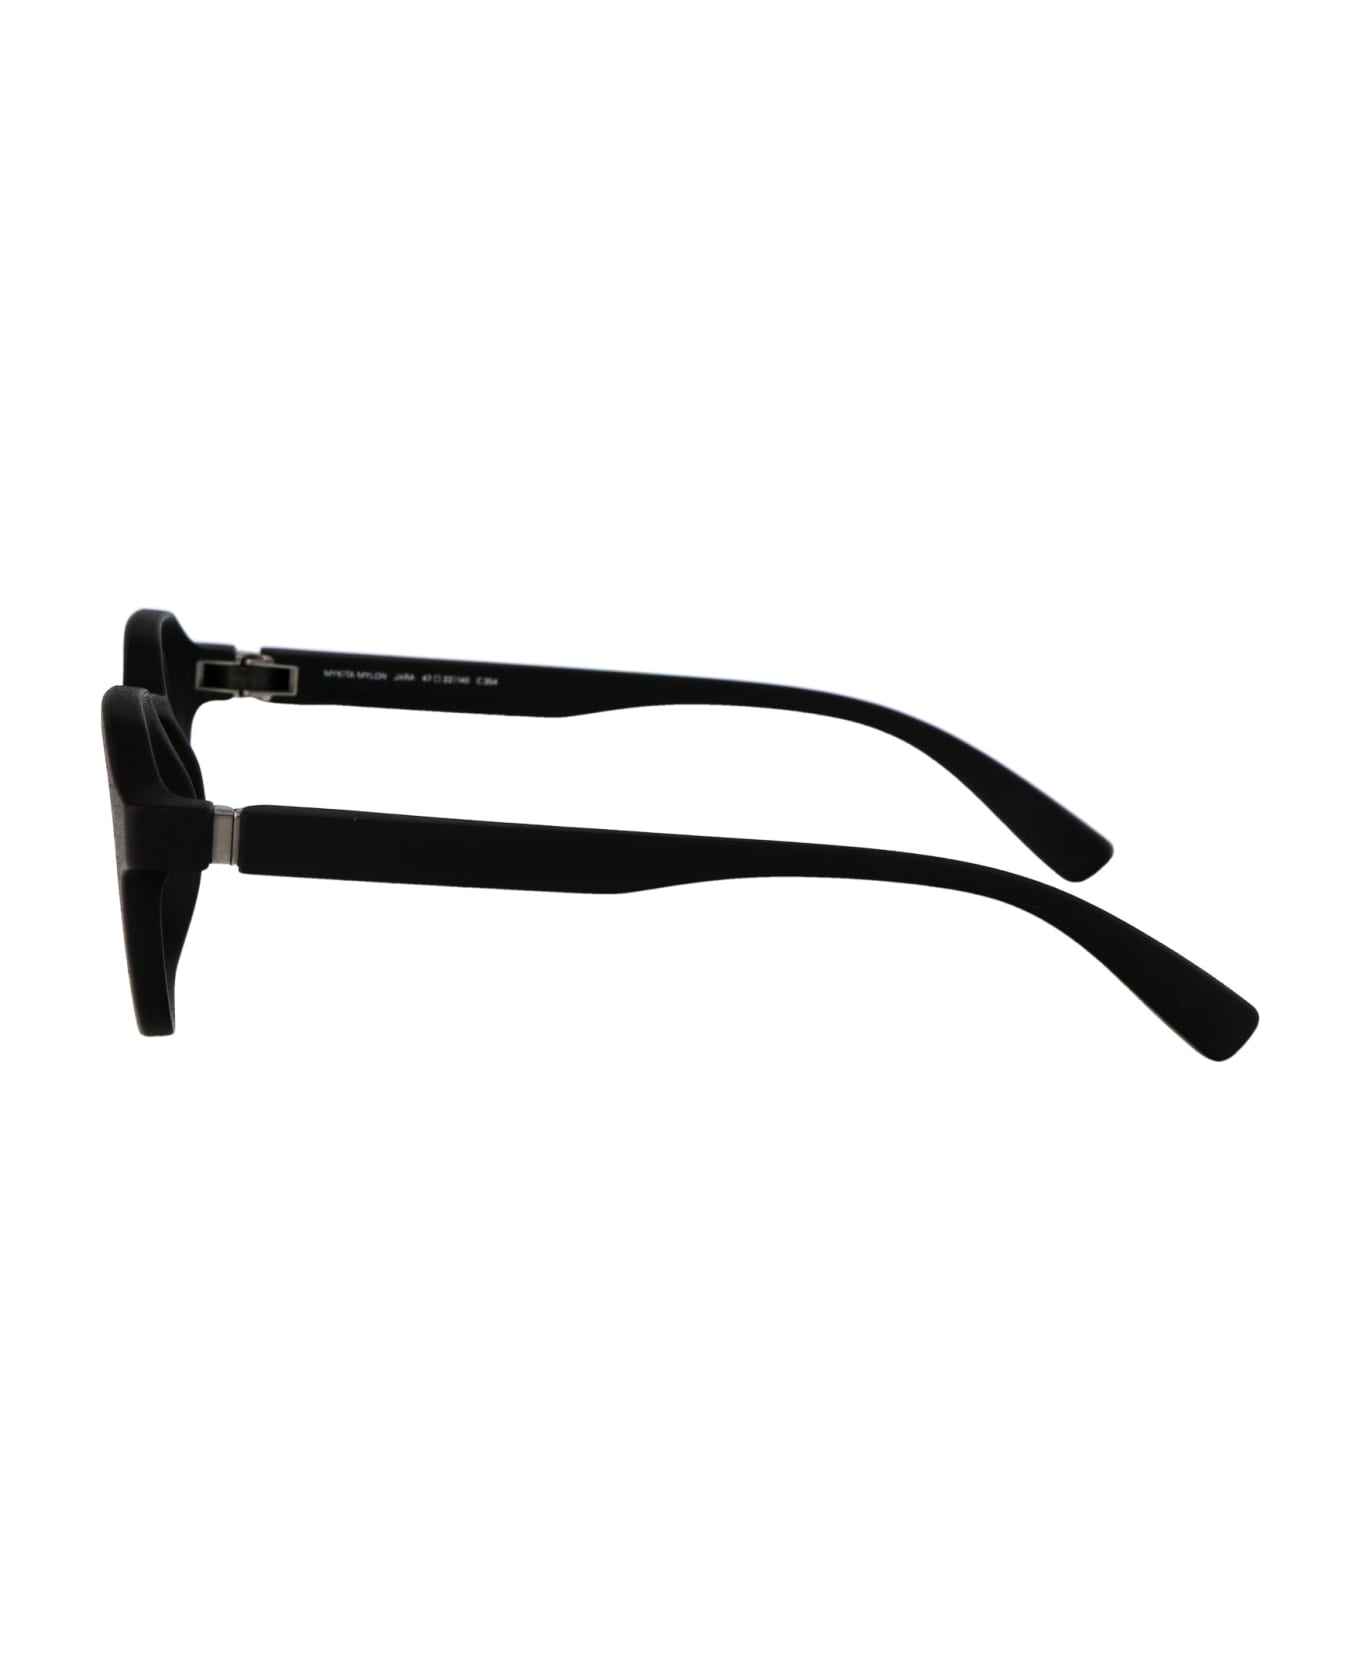 Mykita Jara Glasses - 354 MD1-Pitch Black Clear アイウェア